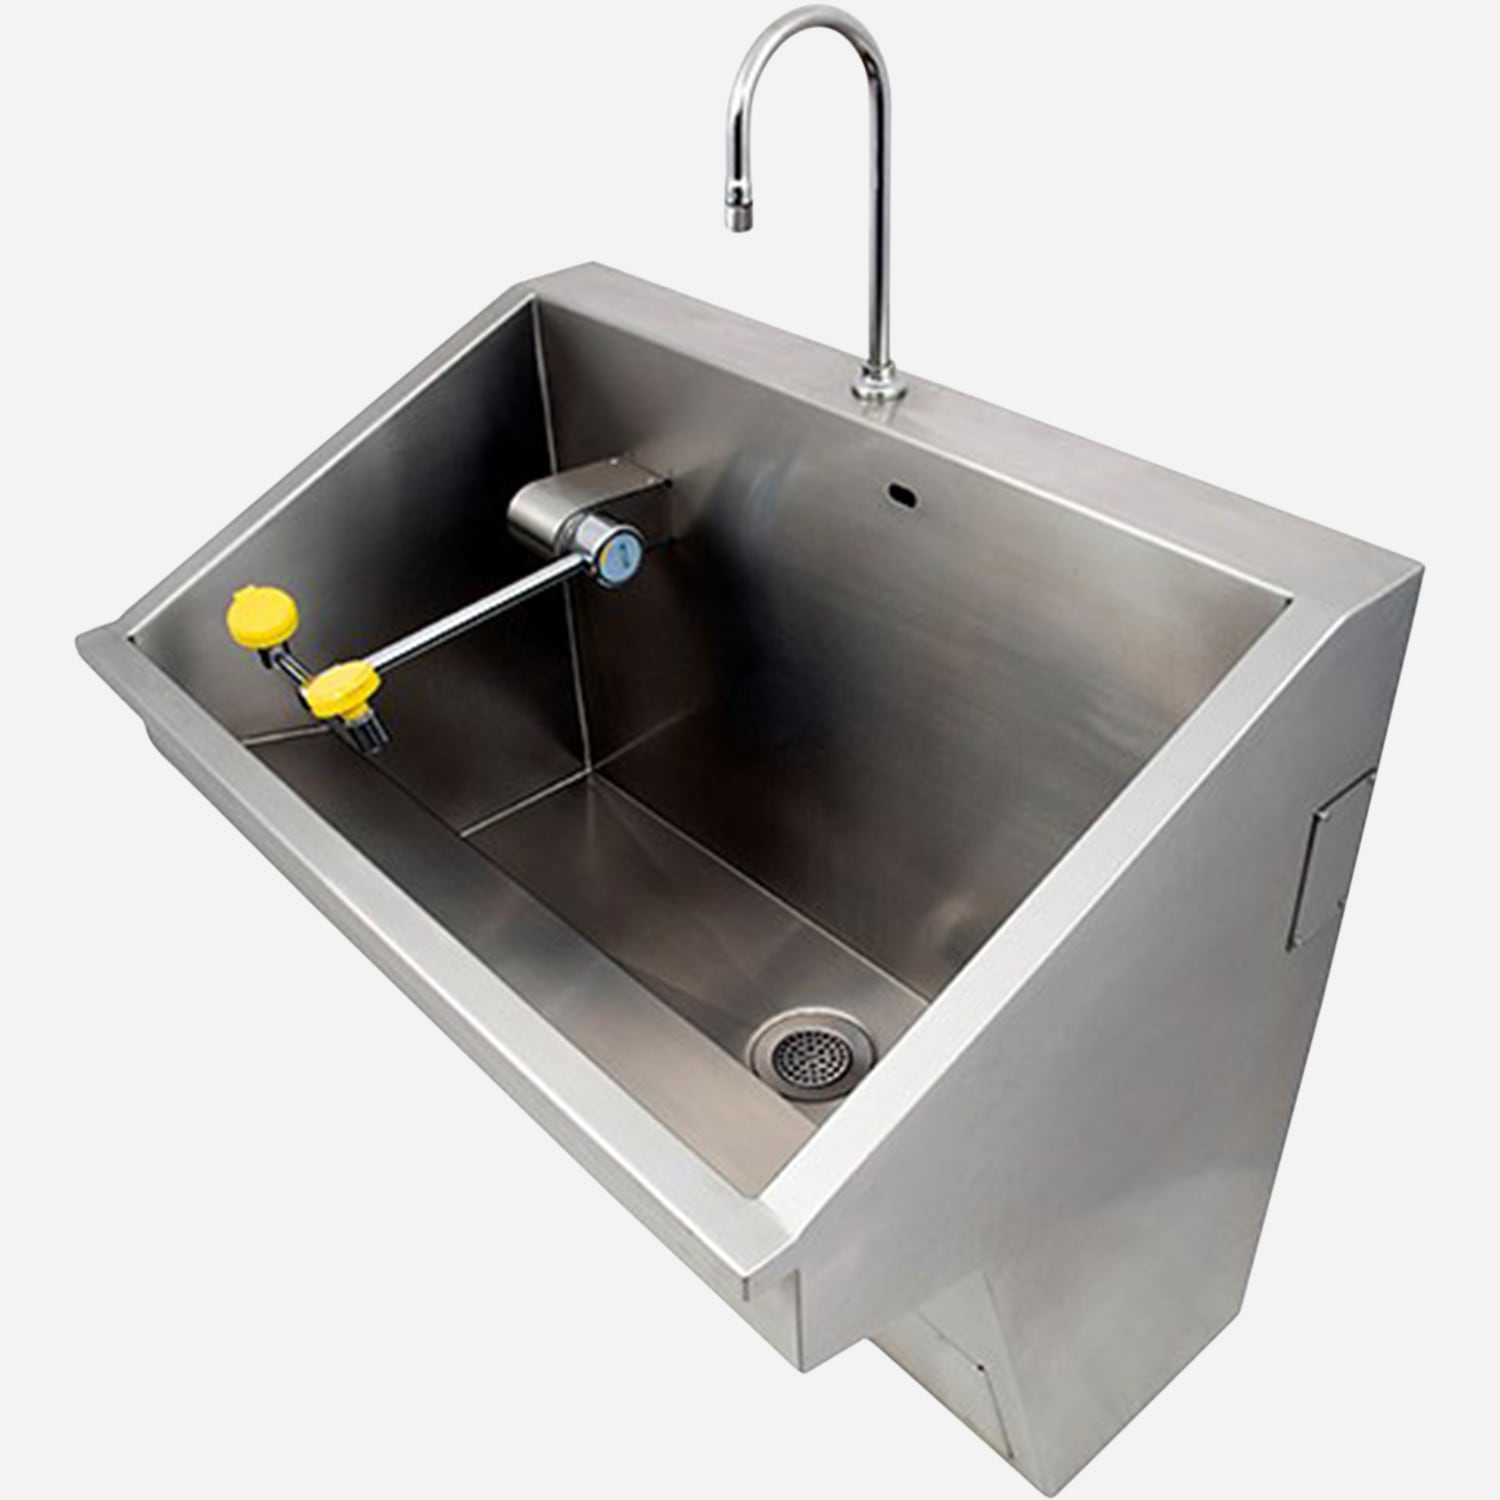 Scrub-Ware® Scrub Sinks - Whitehall Mfg